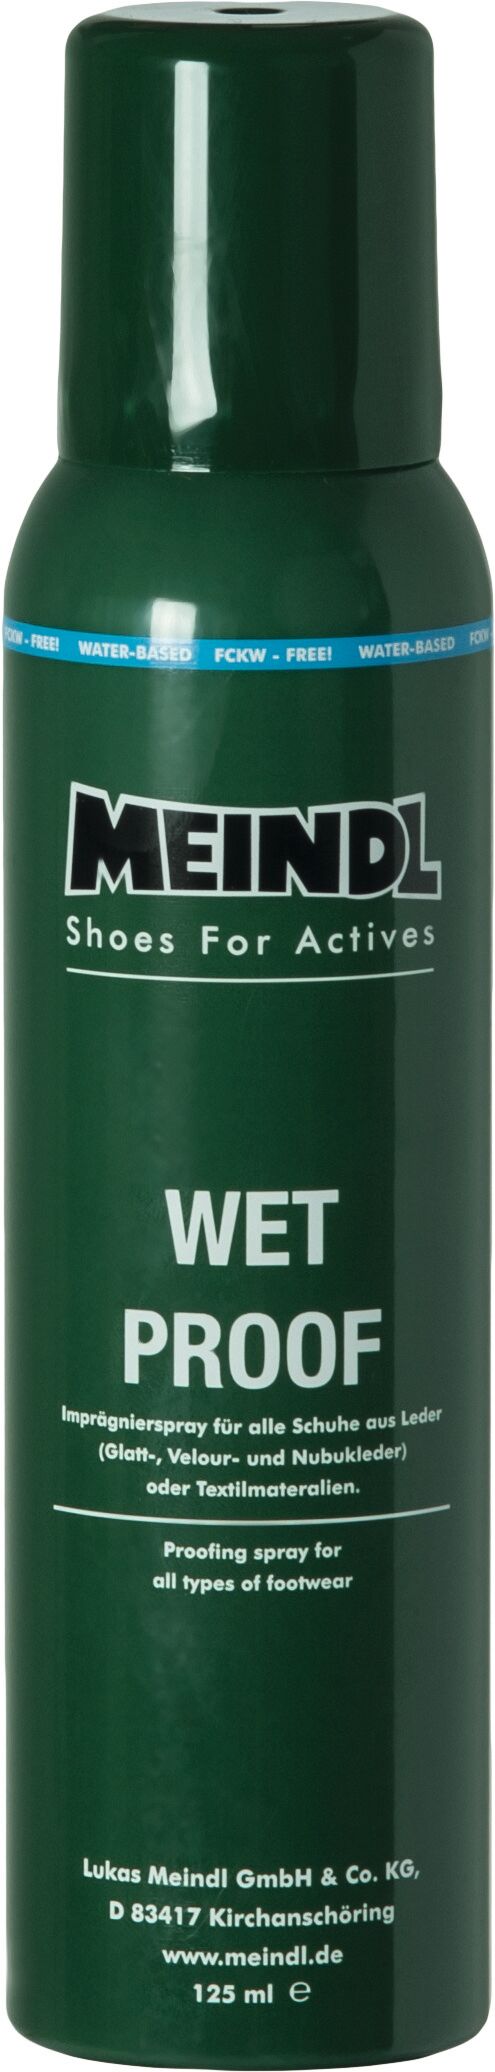 Meindl - Wet-Proof - Cura delle scarpe